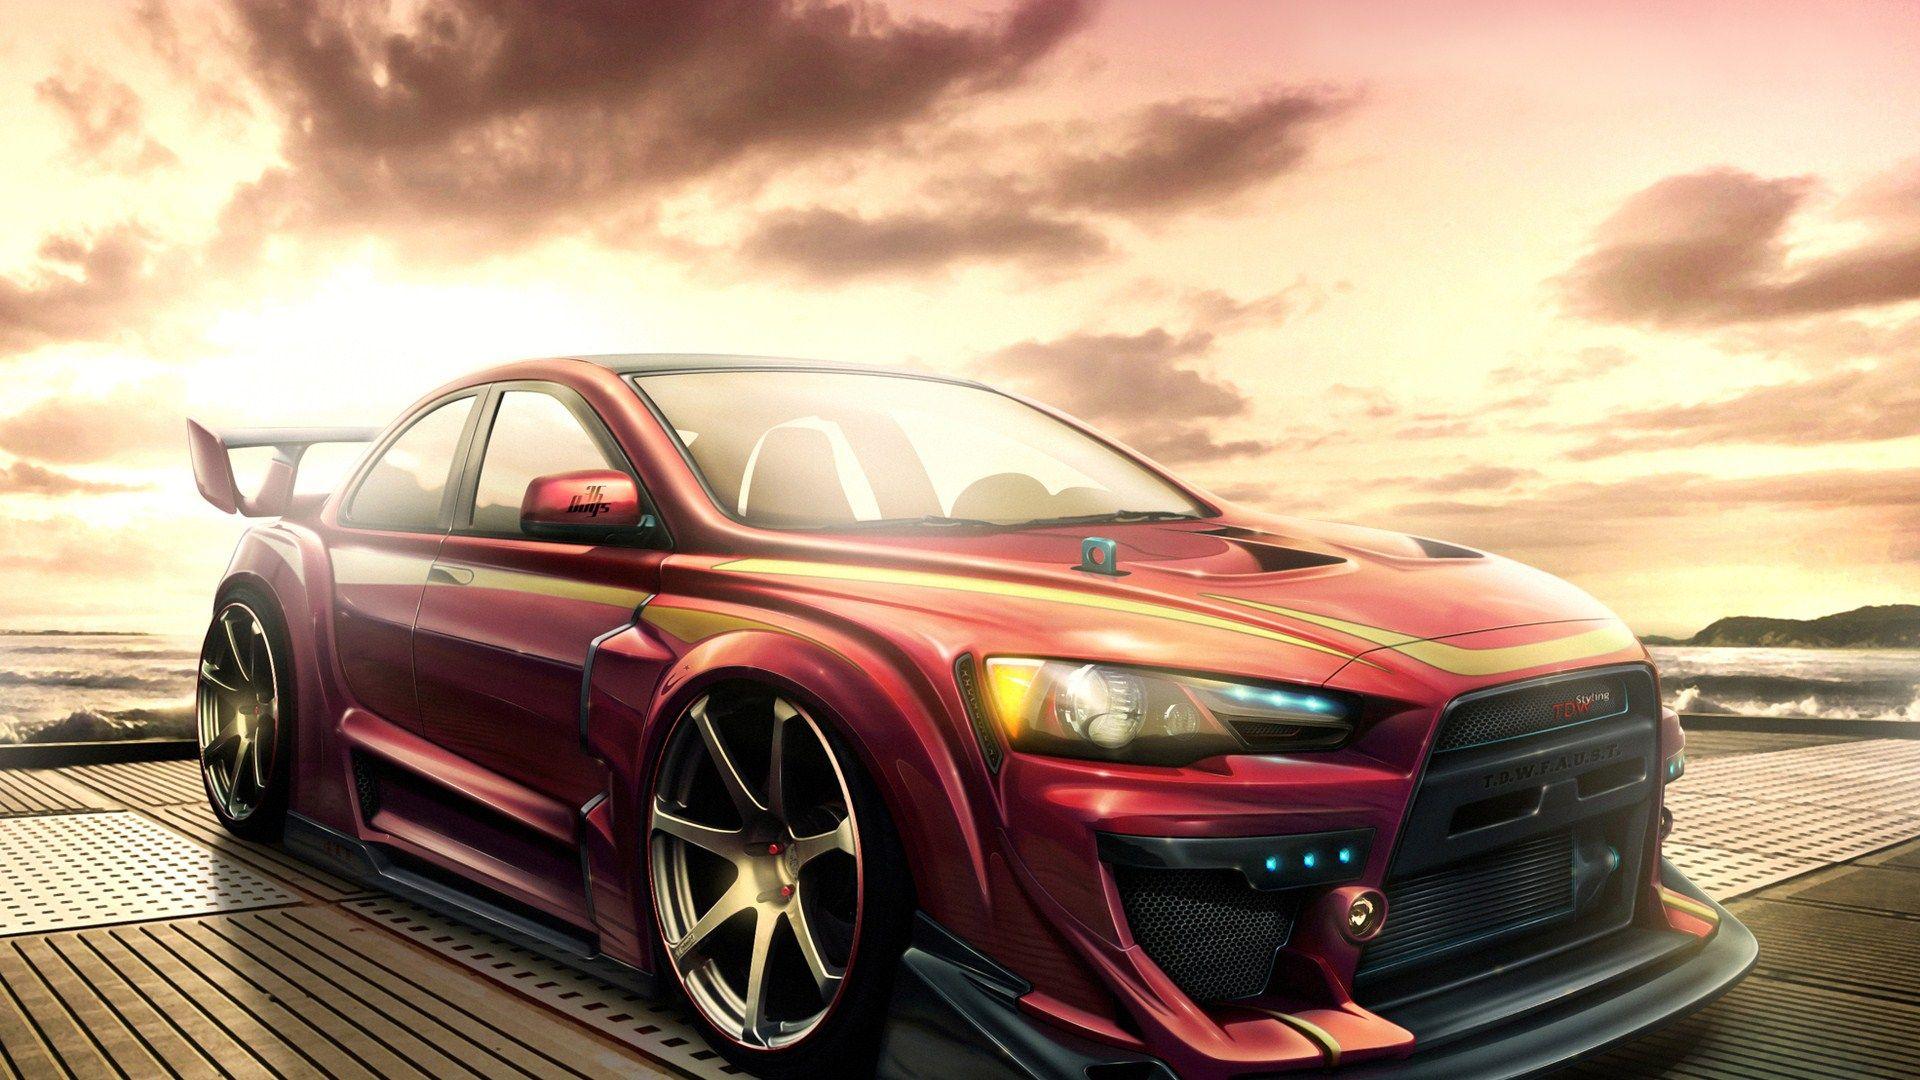 Mitsubishi Lancer Evolution HD Wallpaper, Background Image